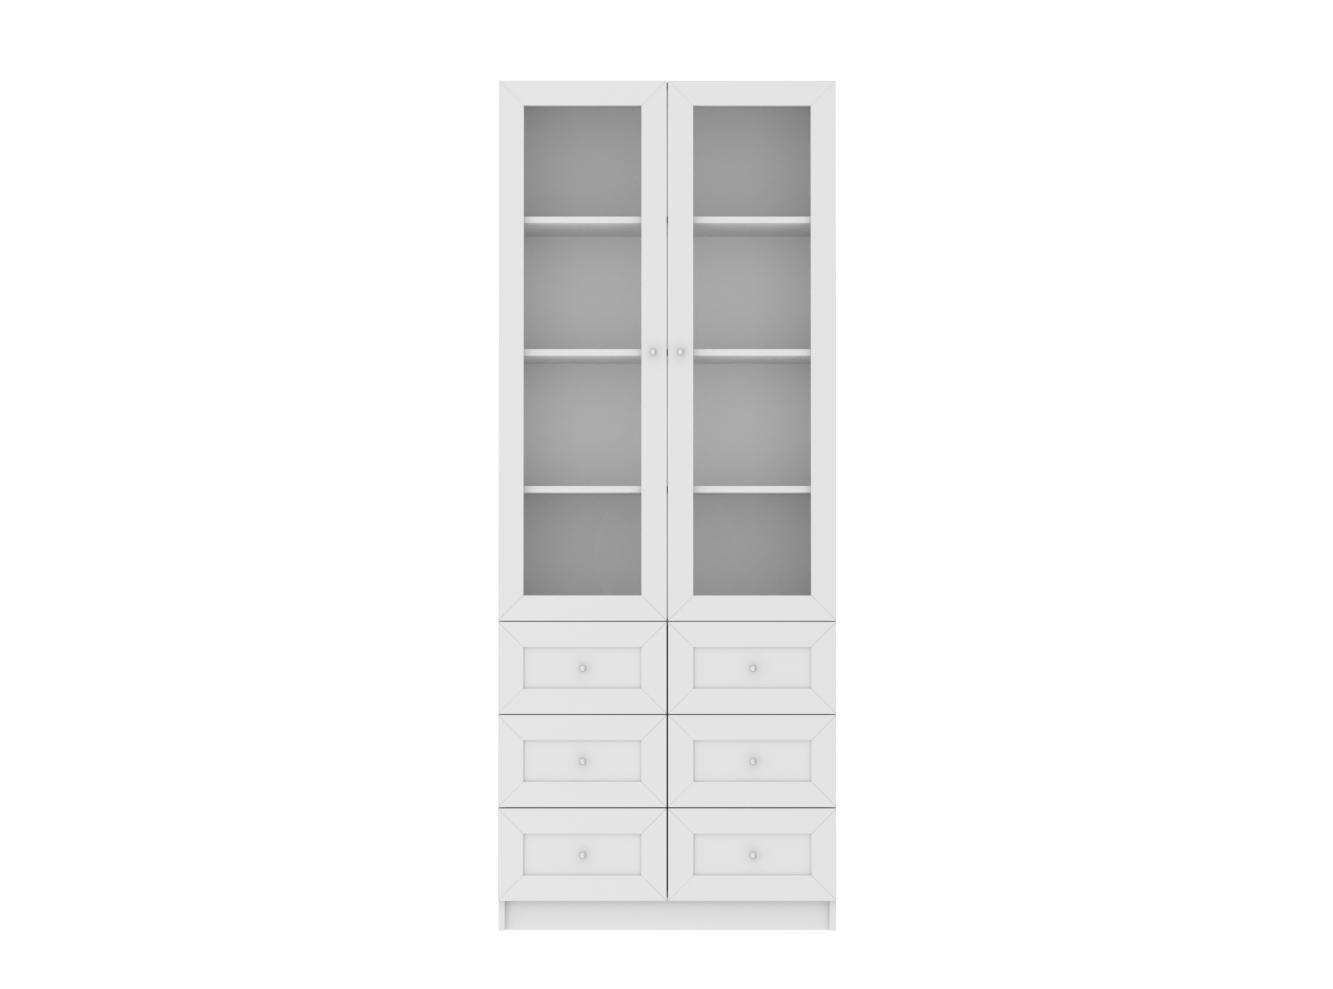  Книжный шкаф Билли 317 white ИКЕА (IKEA) изображение товара